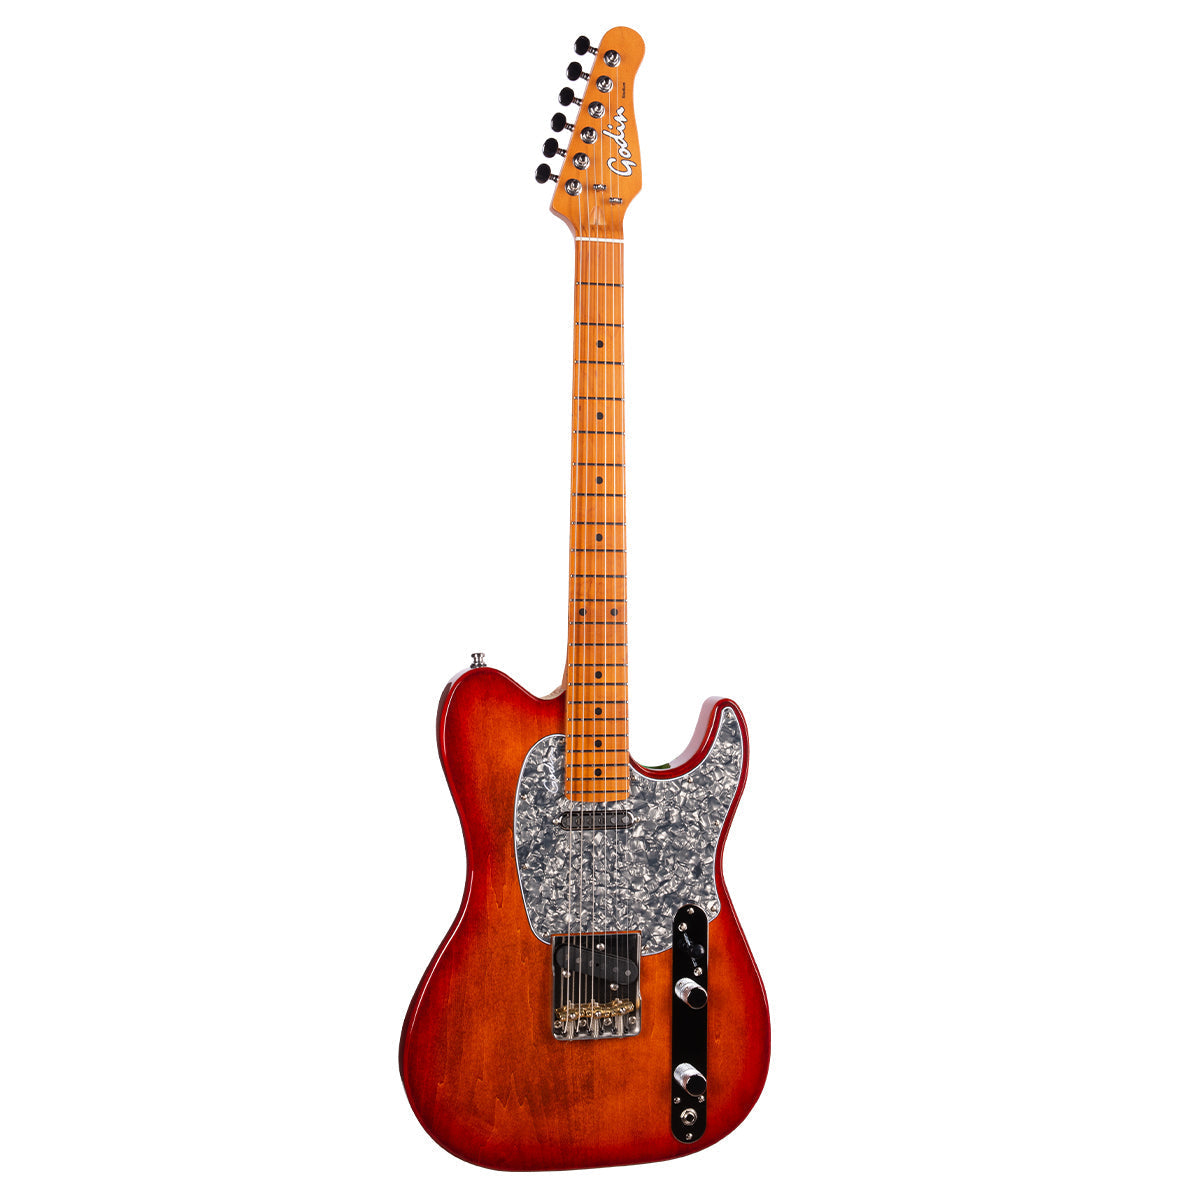 Godin Stadium Pro Electric Guitar ~ Sunset Burst MN, Electric Guitar for sale at Richards Guitars.